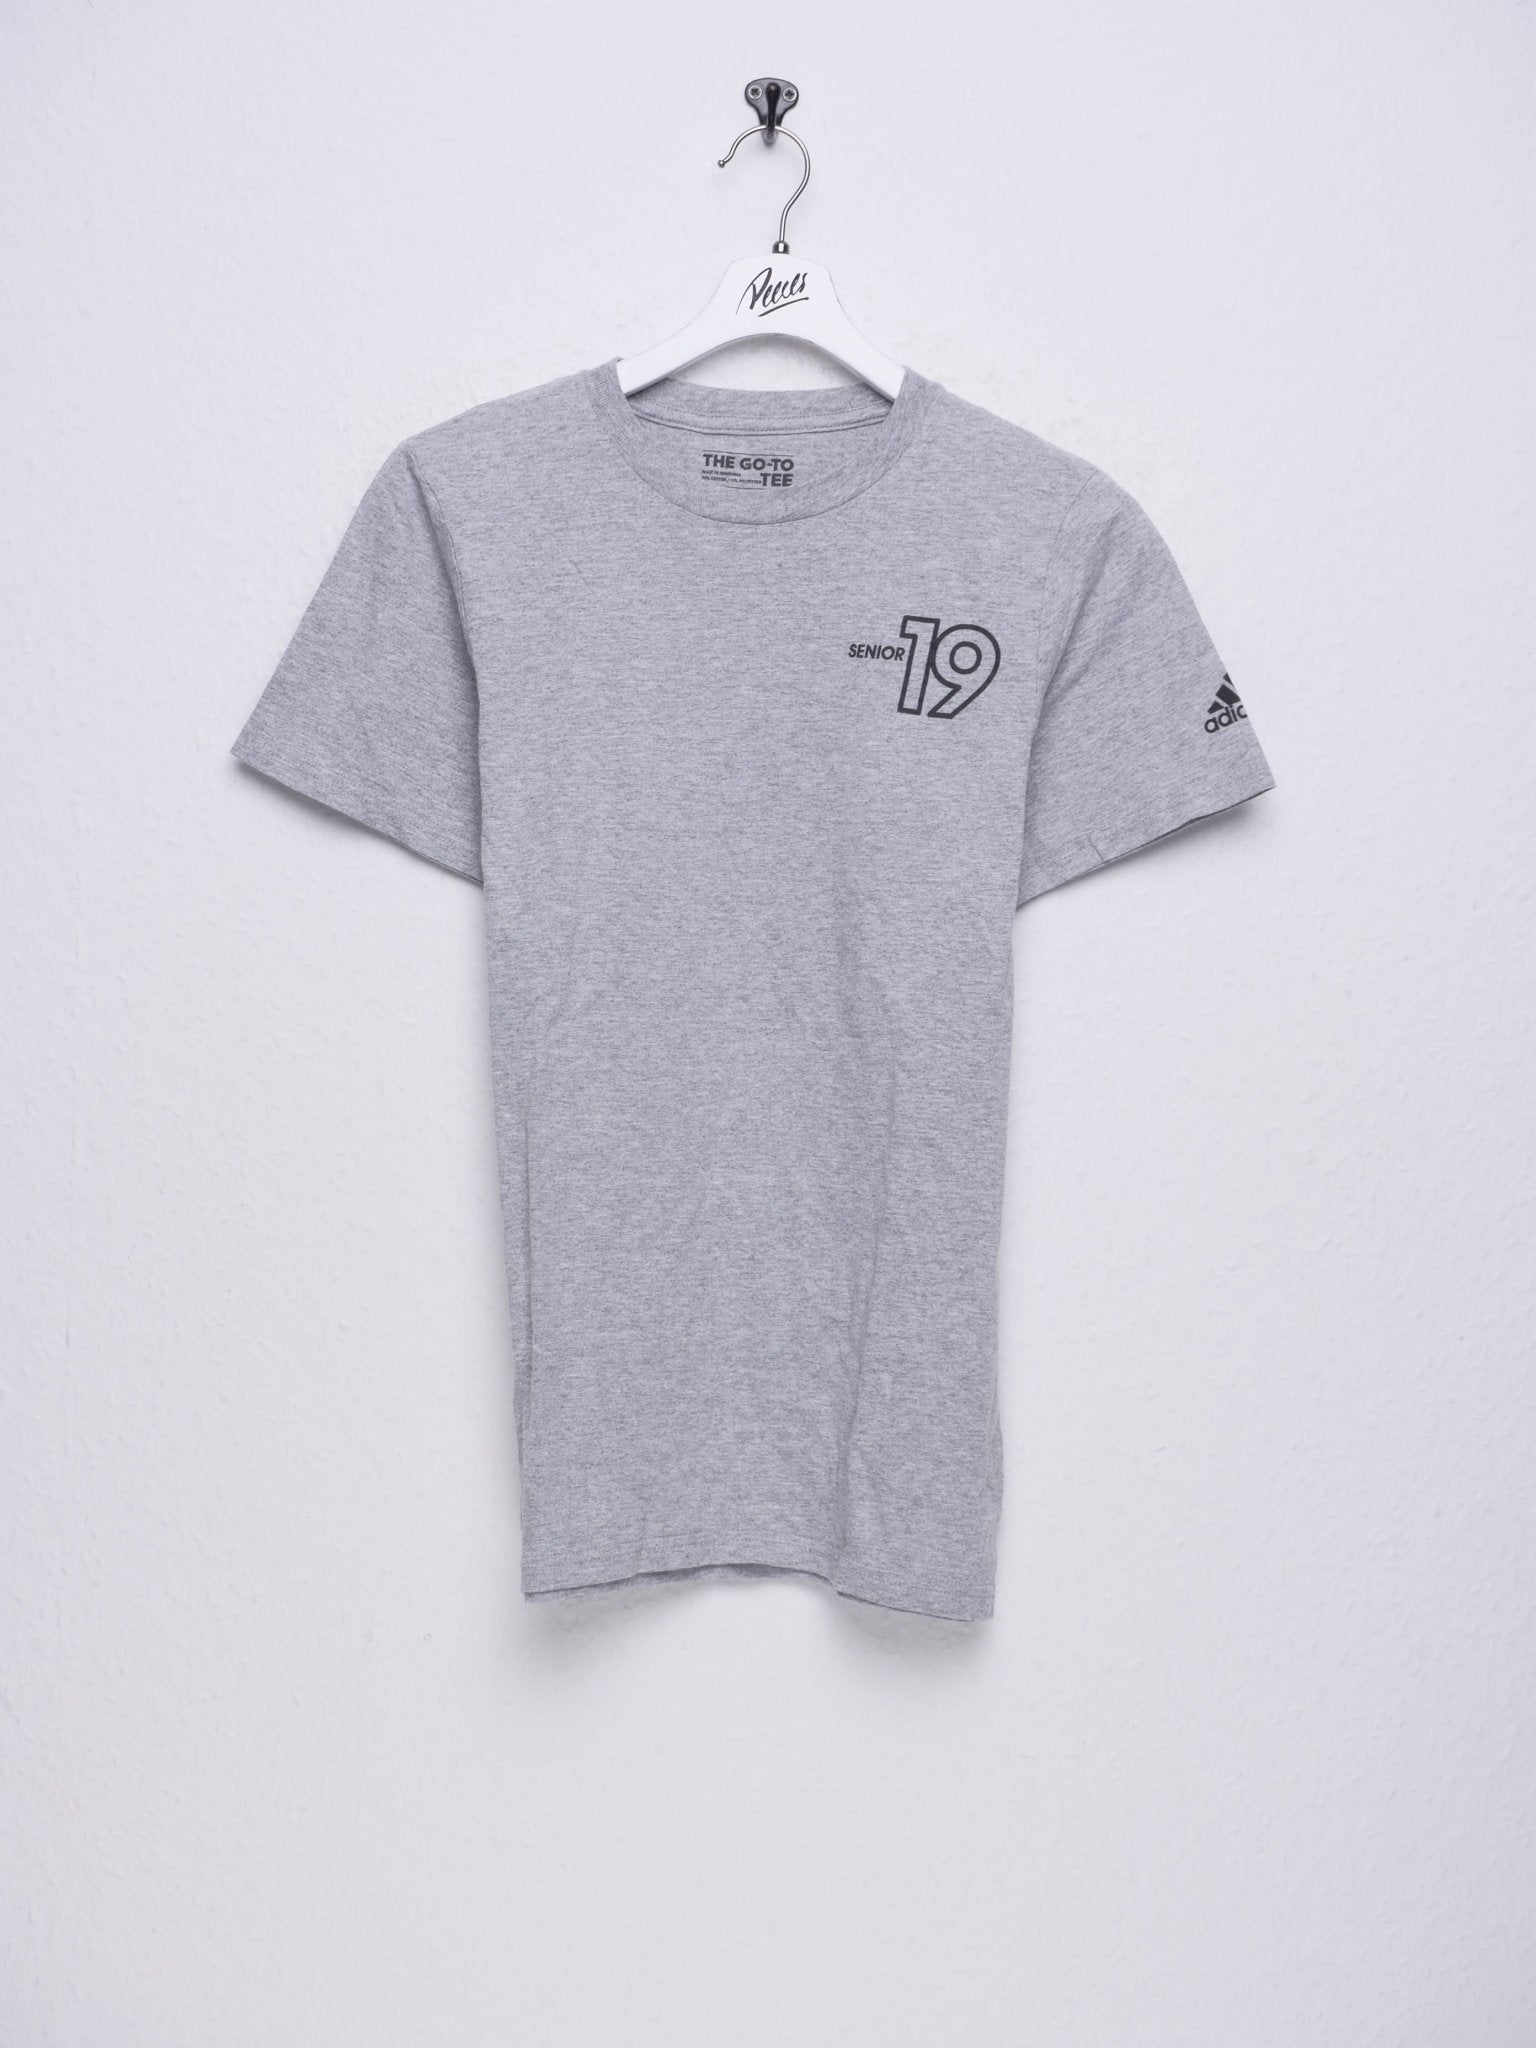 Adidas printed Logo grey Shirt - Peeces